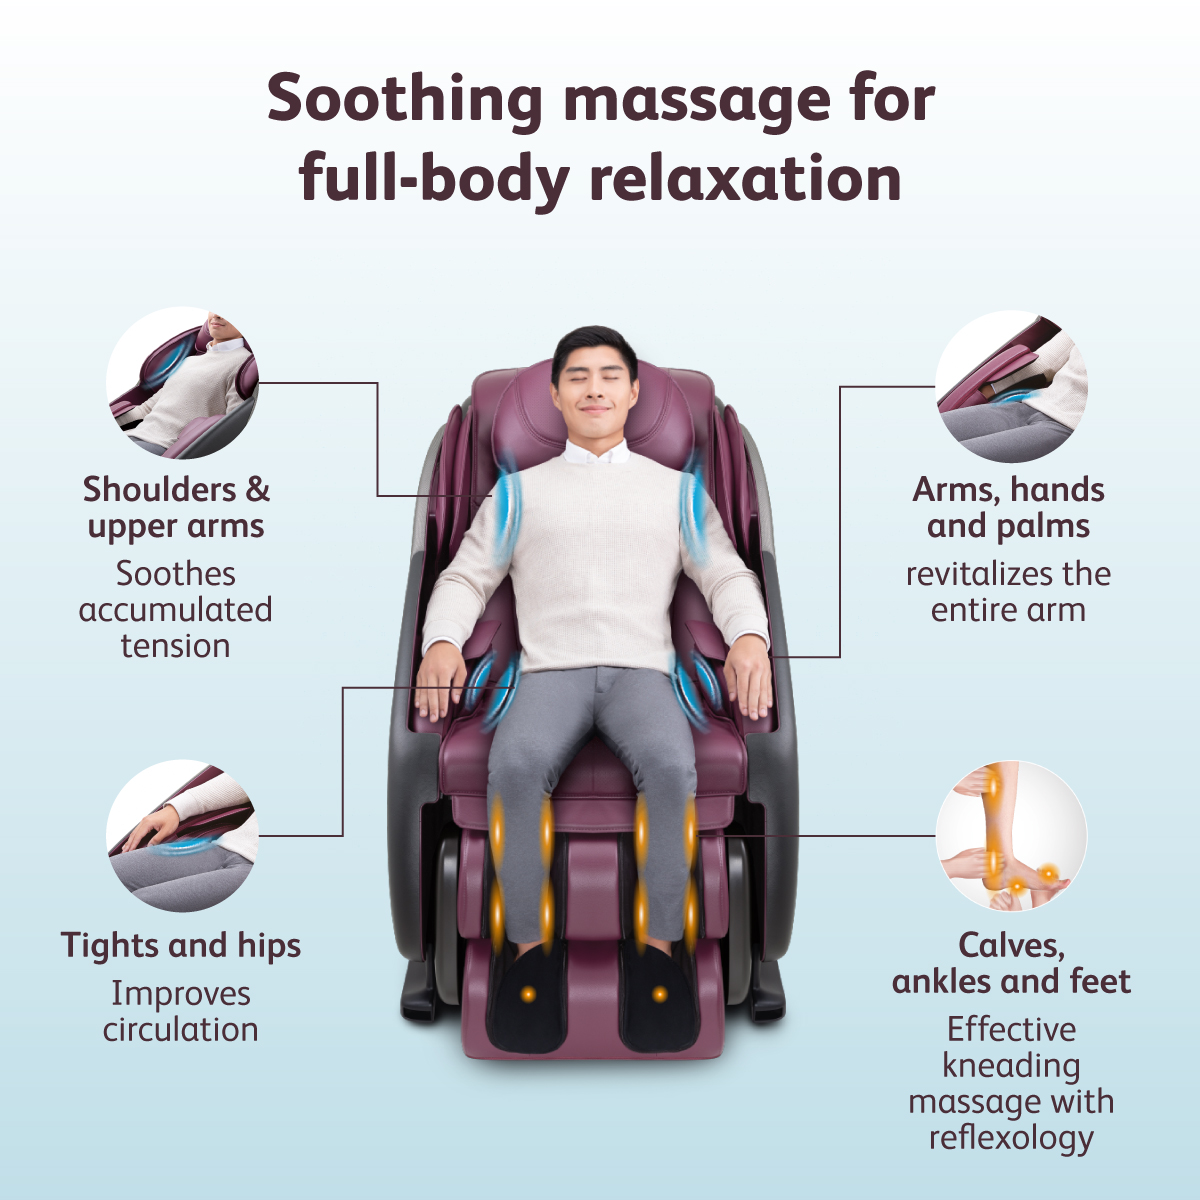 OSIM uDeluxe Max (Purple) Massage Chair *Online Exclusive*